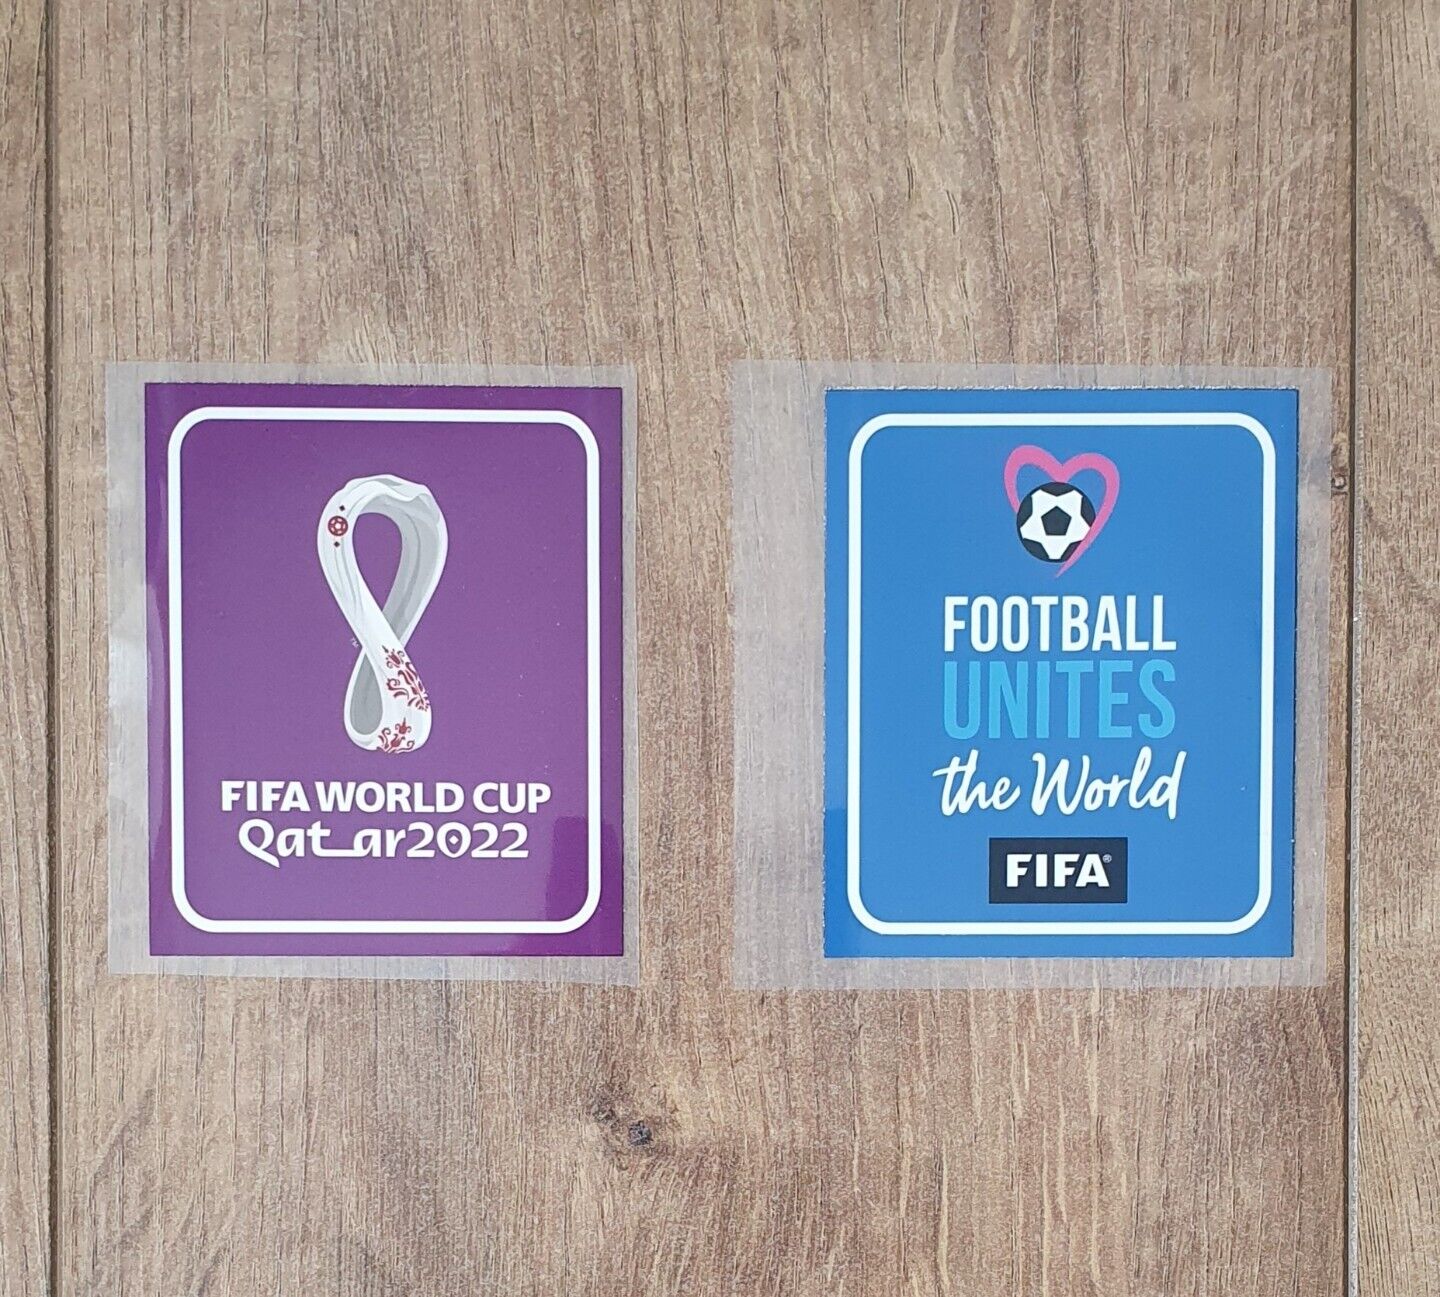 2022 Qatar World Cup+Football Unites The World Patch